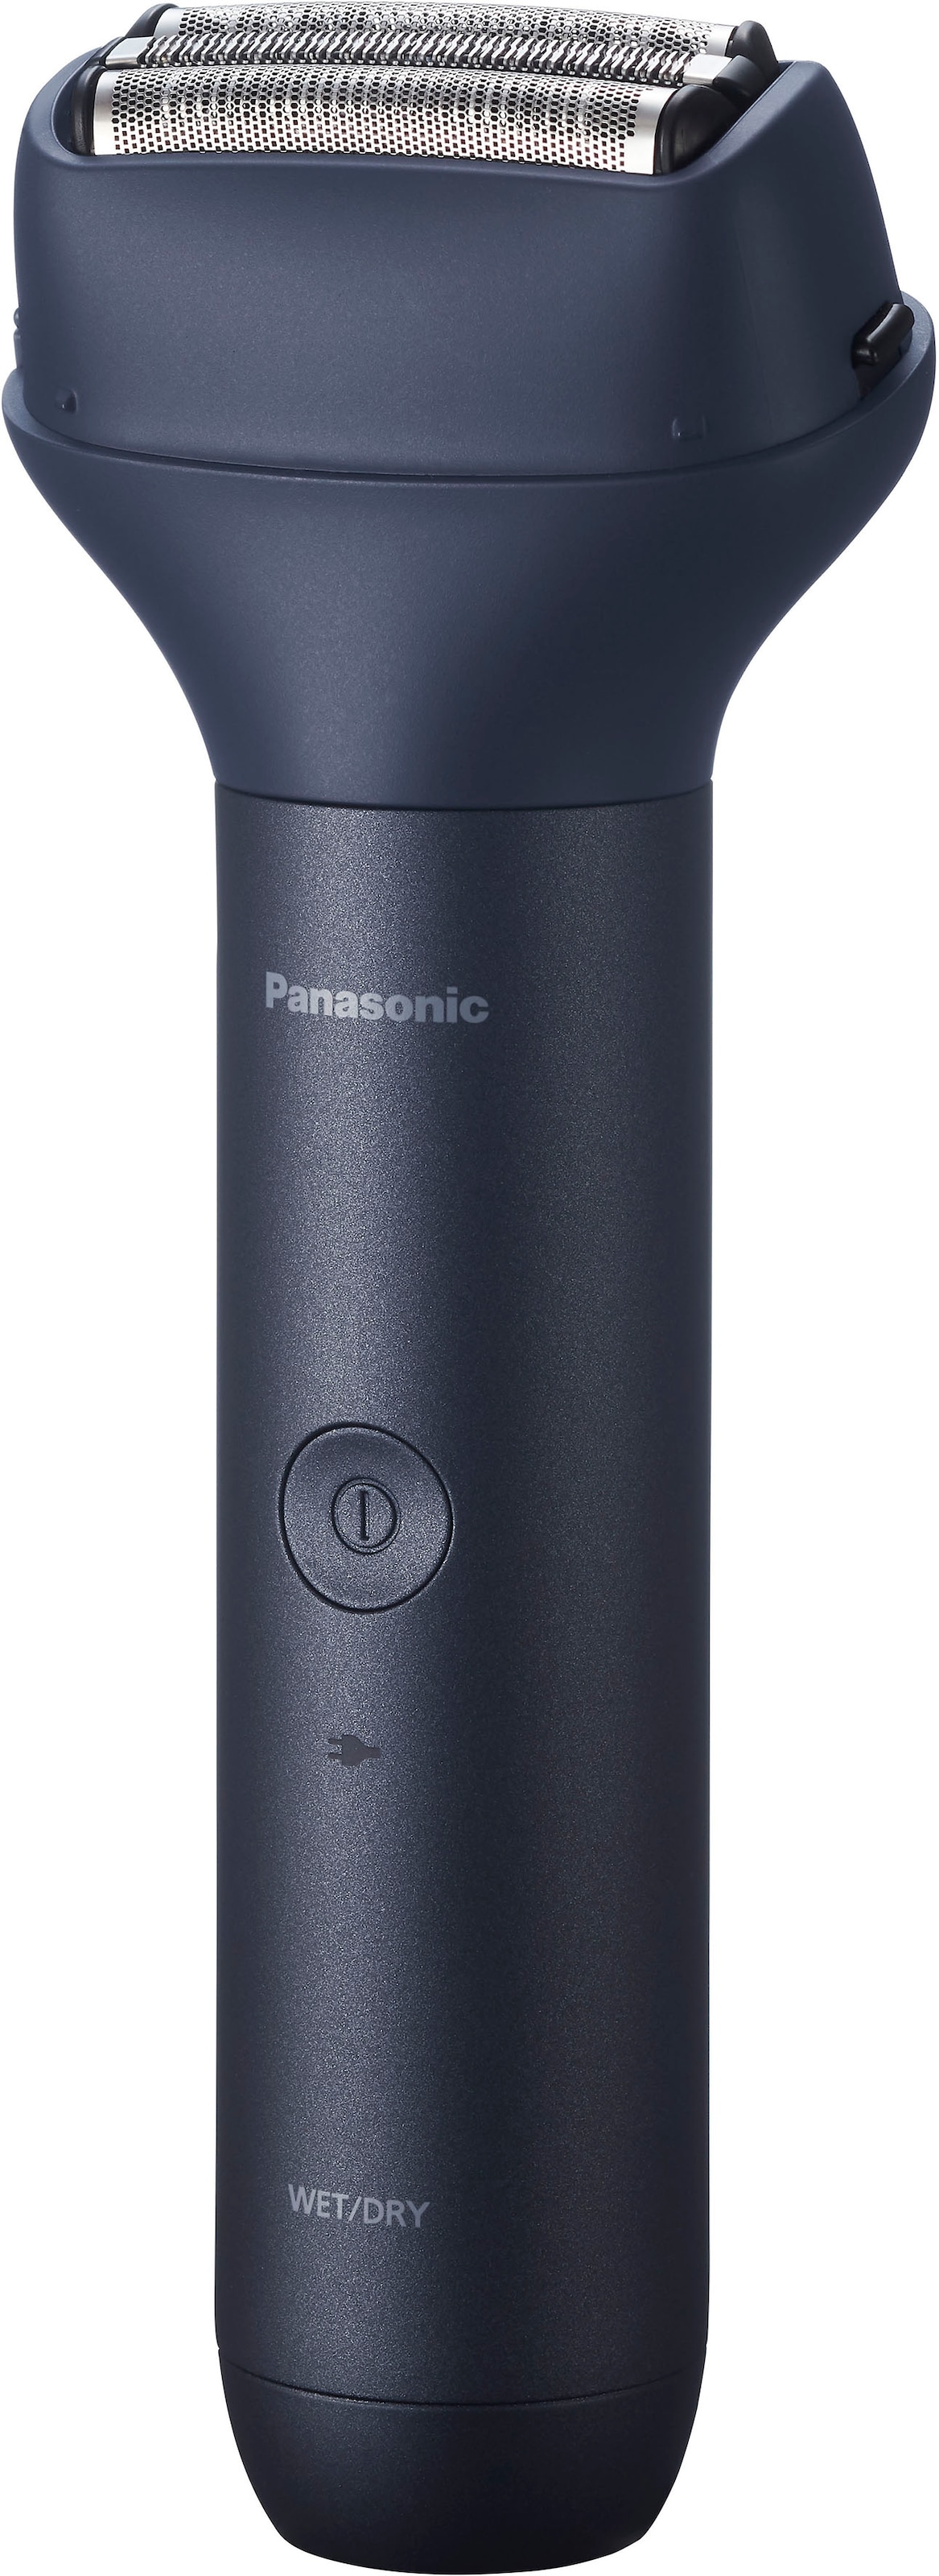 Panasonic Rasieraufsatz »Multishape ER-CSF1-A301 3-Klingen Rasieraufsatz«, Multifunktionstrimmer